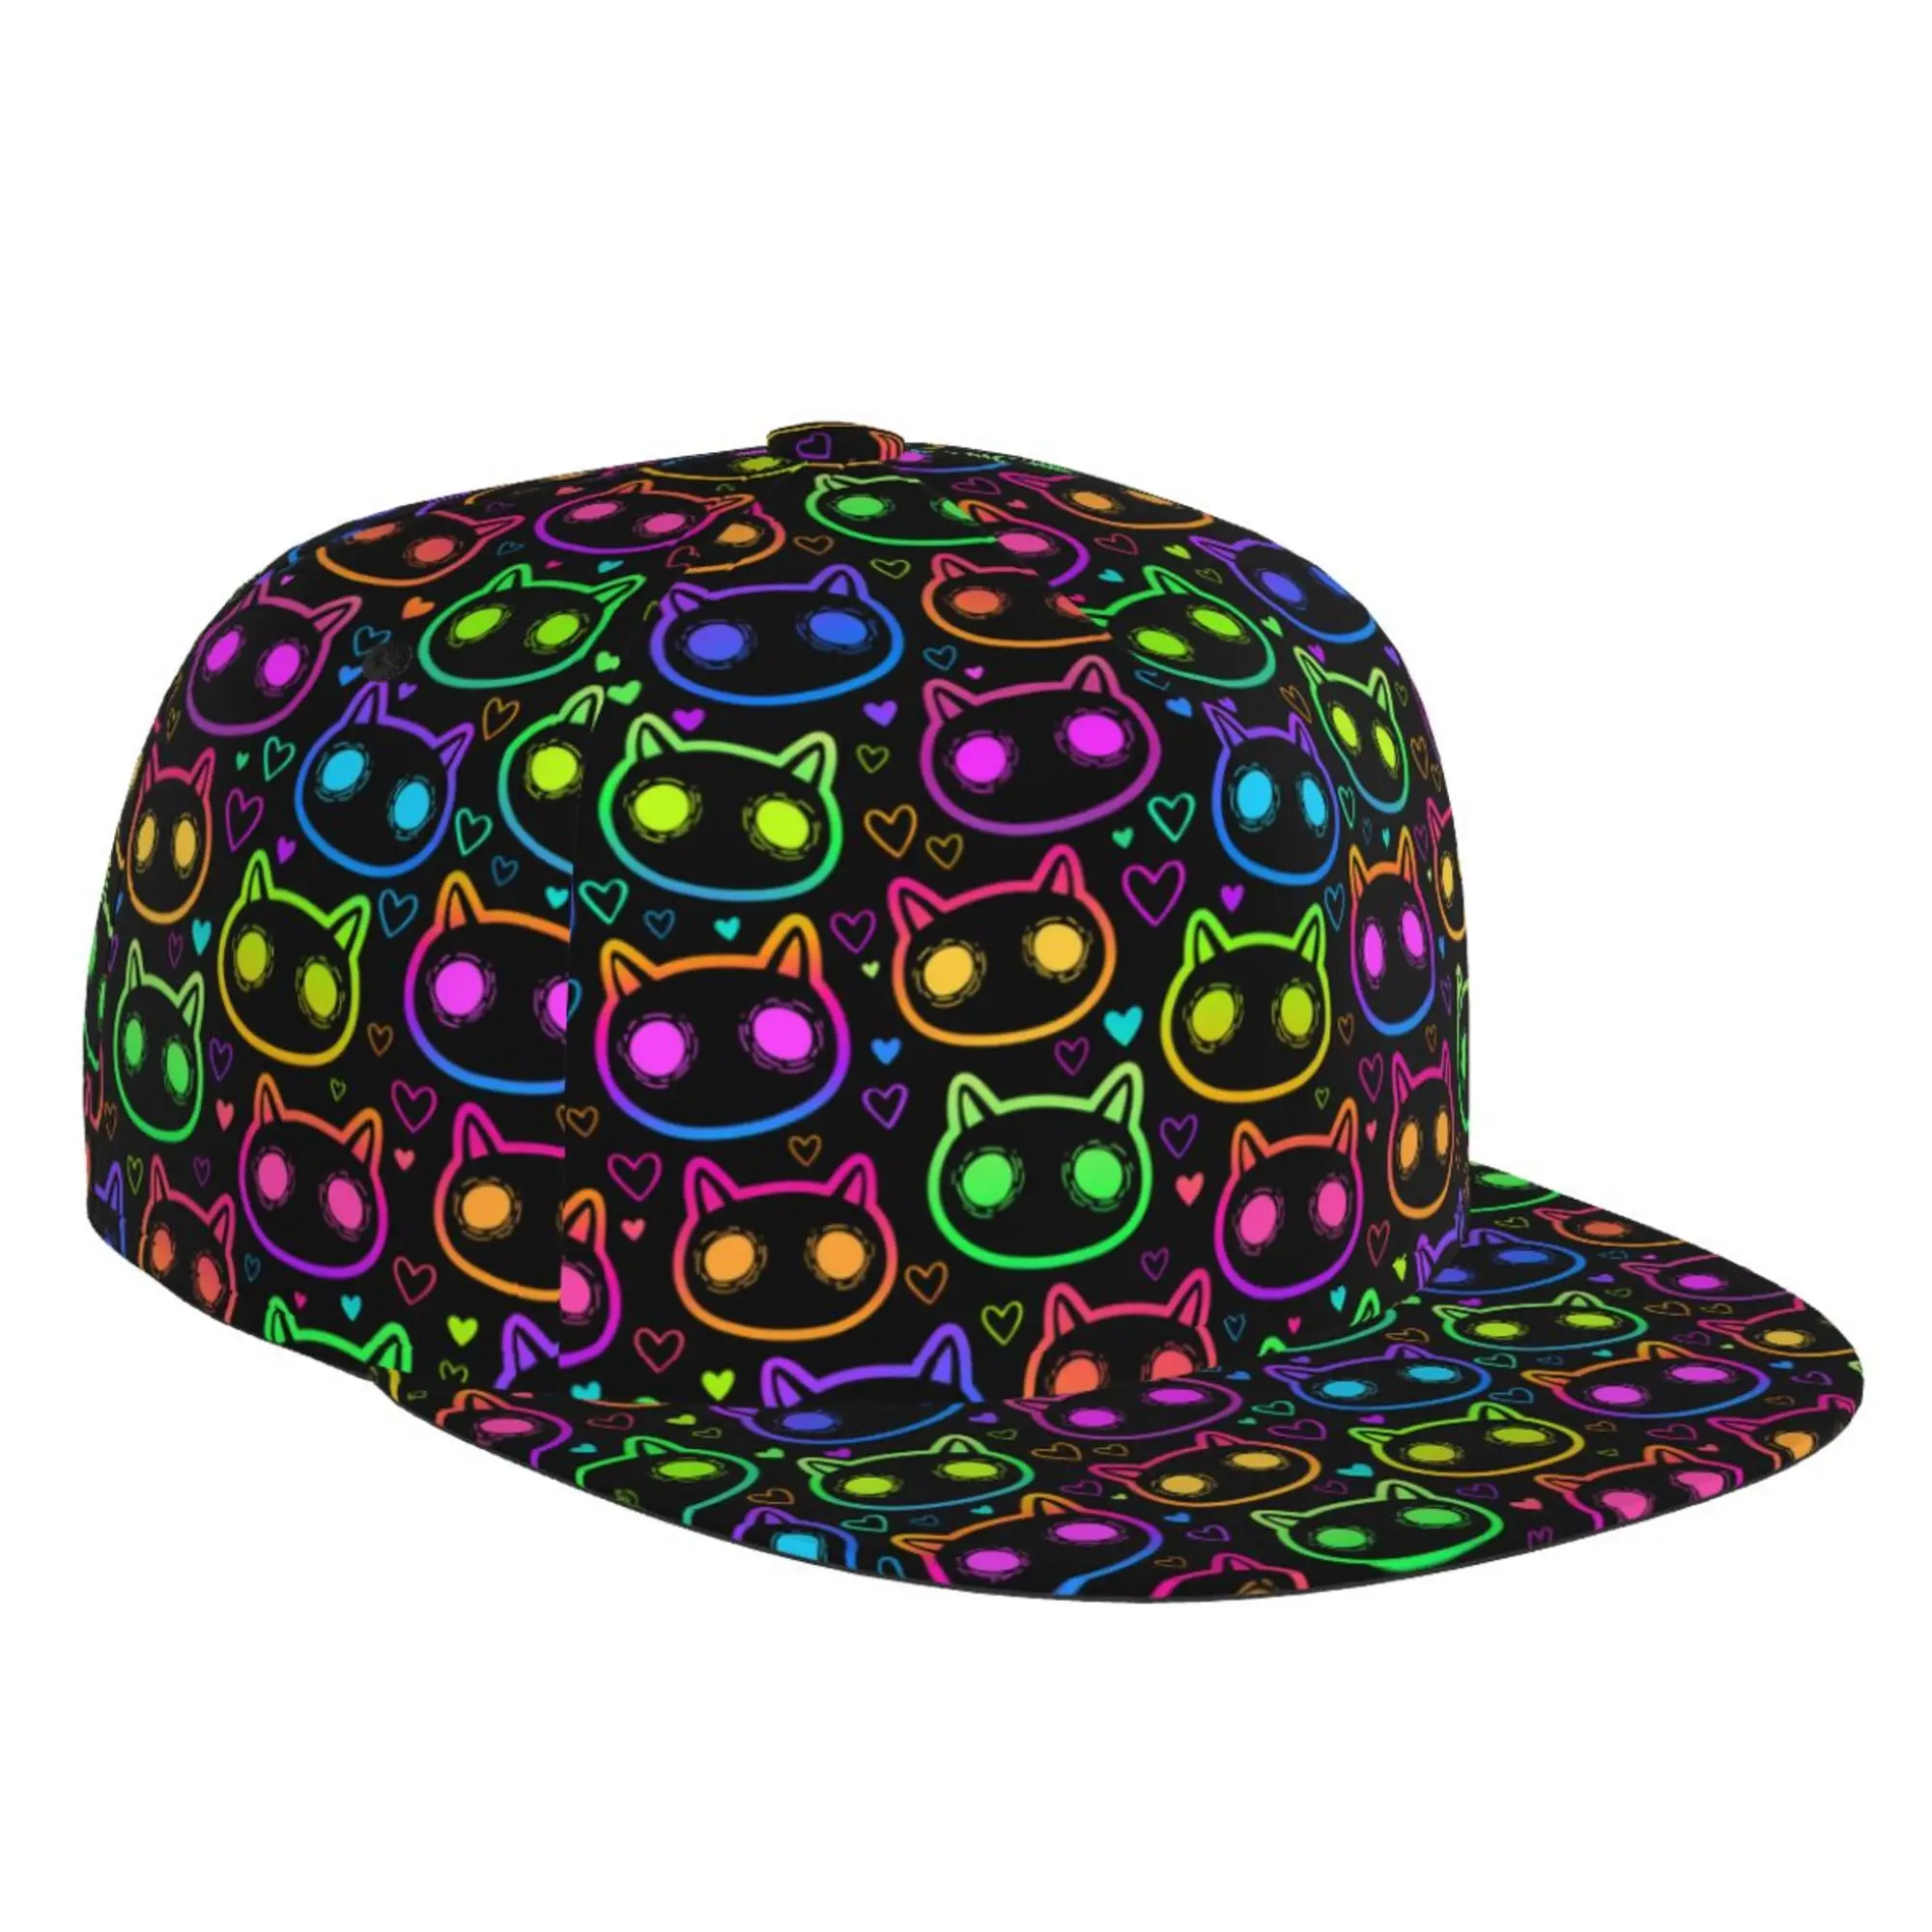 

Flat Brim Neon Cats Baseball Cap Hip Hop Fashionable All Seasons for Men Women Teens Boys One Size Adjustable Snapback Hat